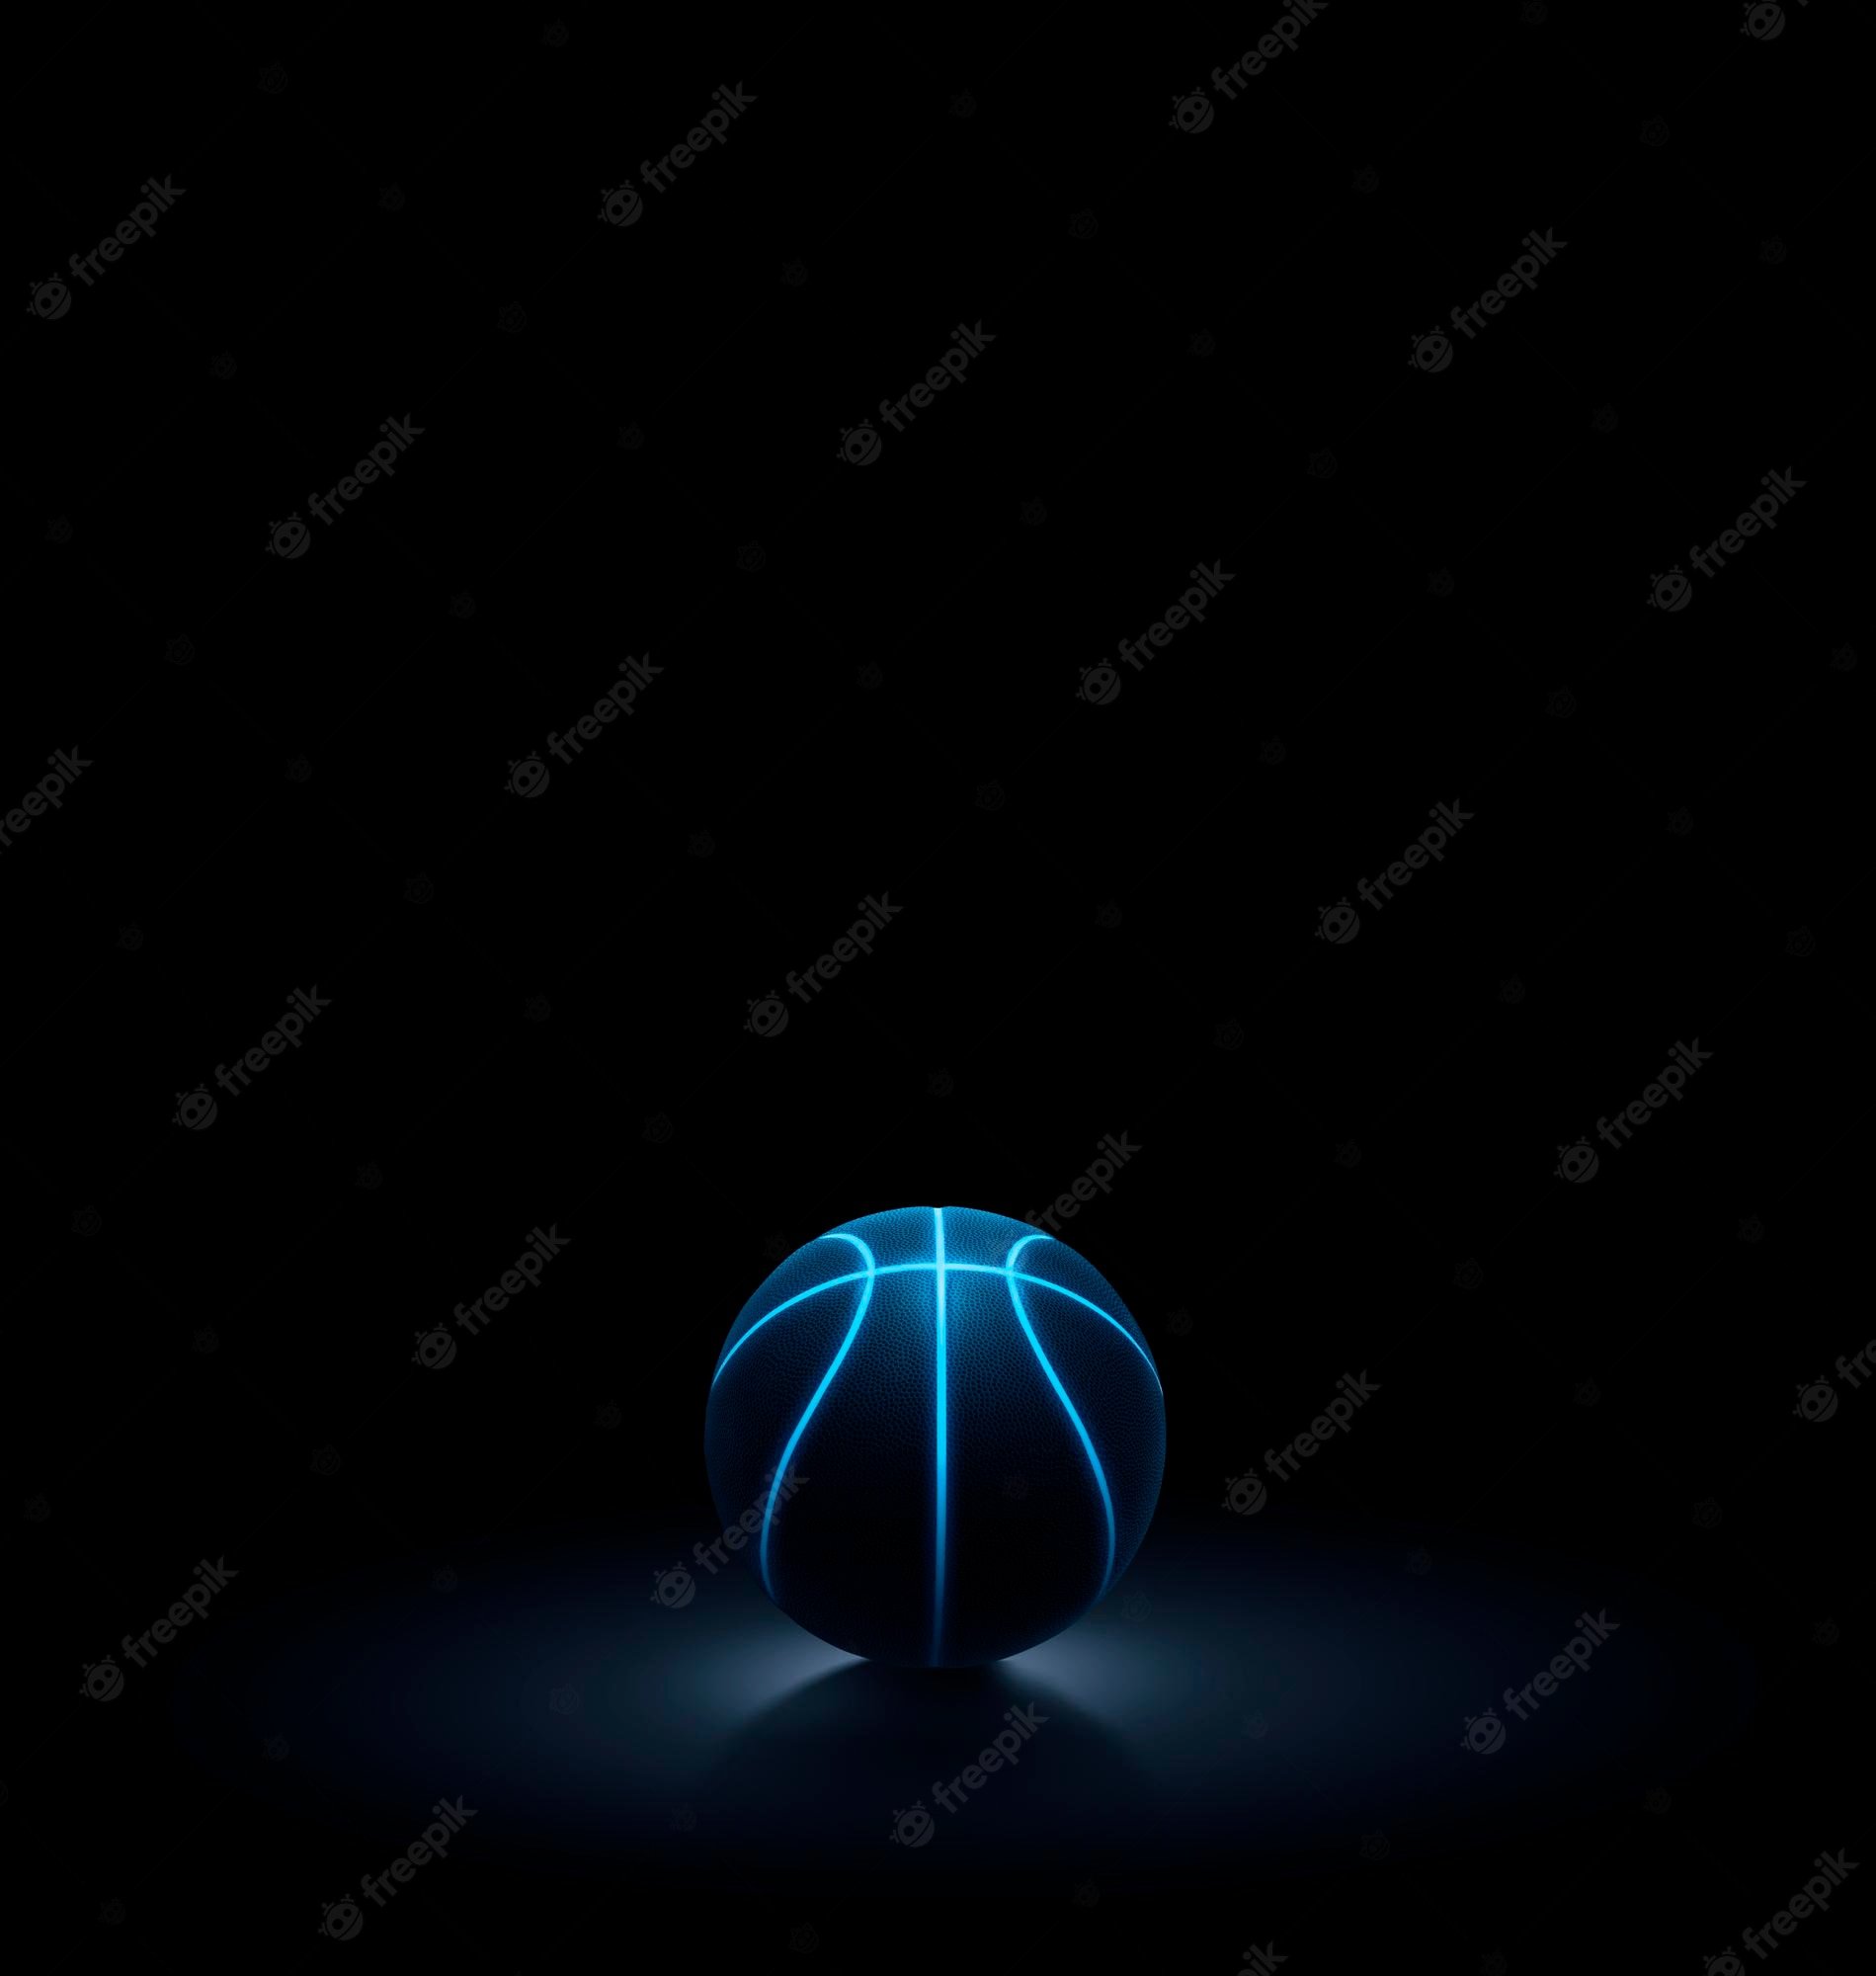 Basketball Dark Image